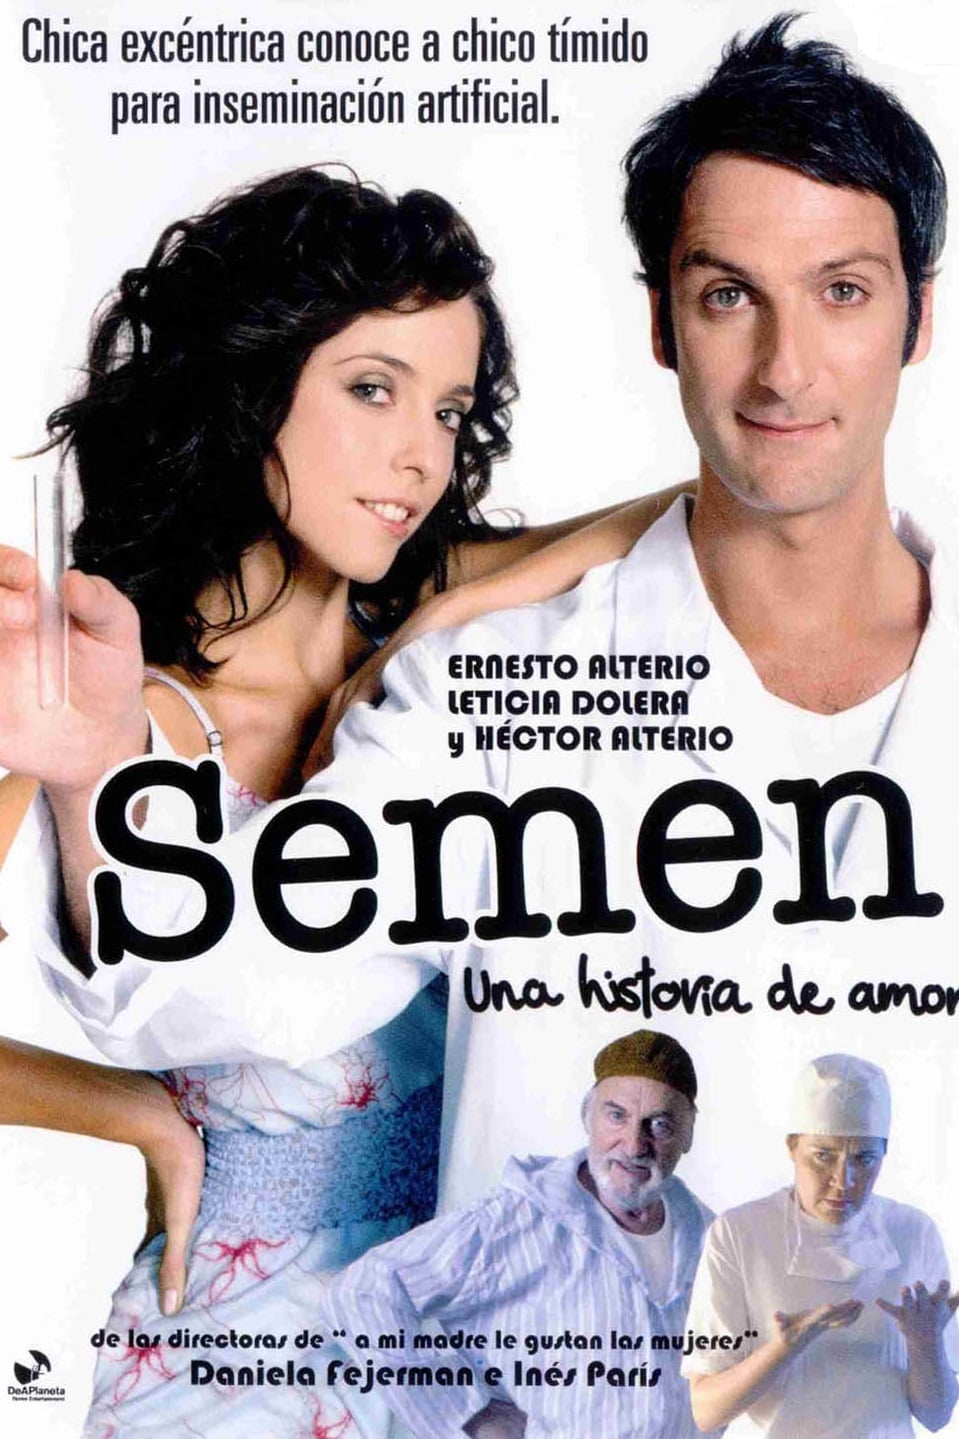 Semen, a History of Love